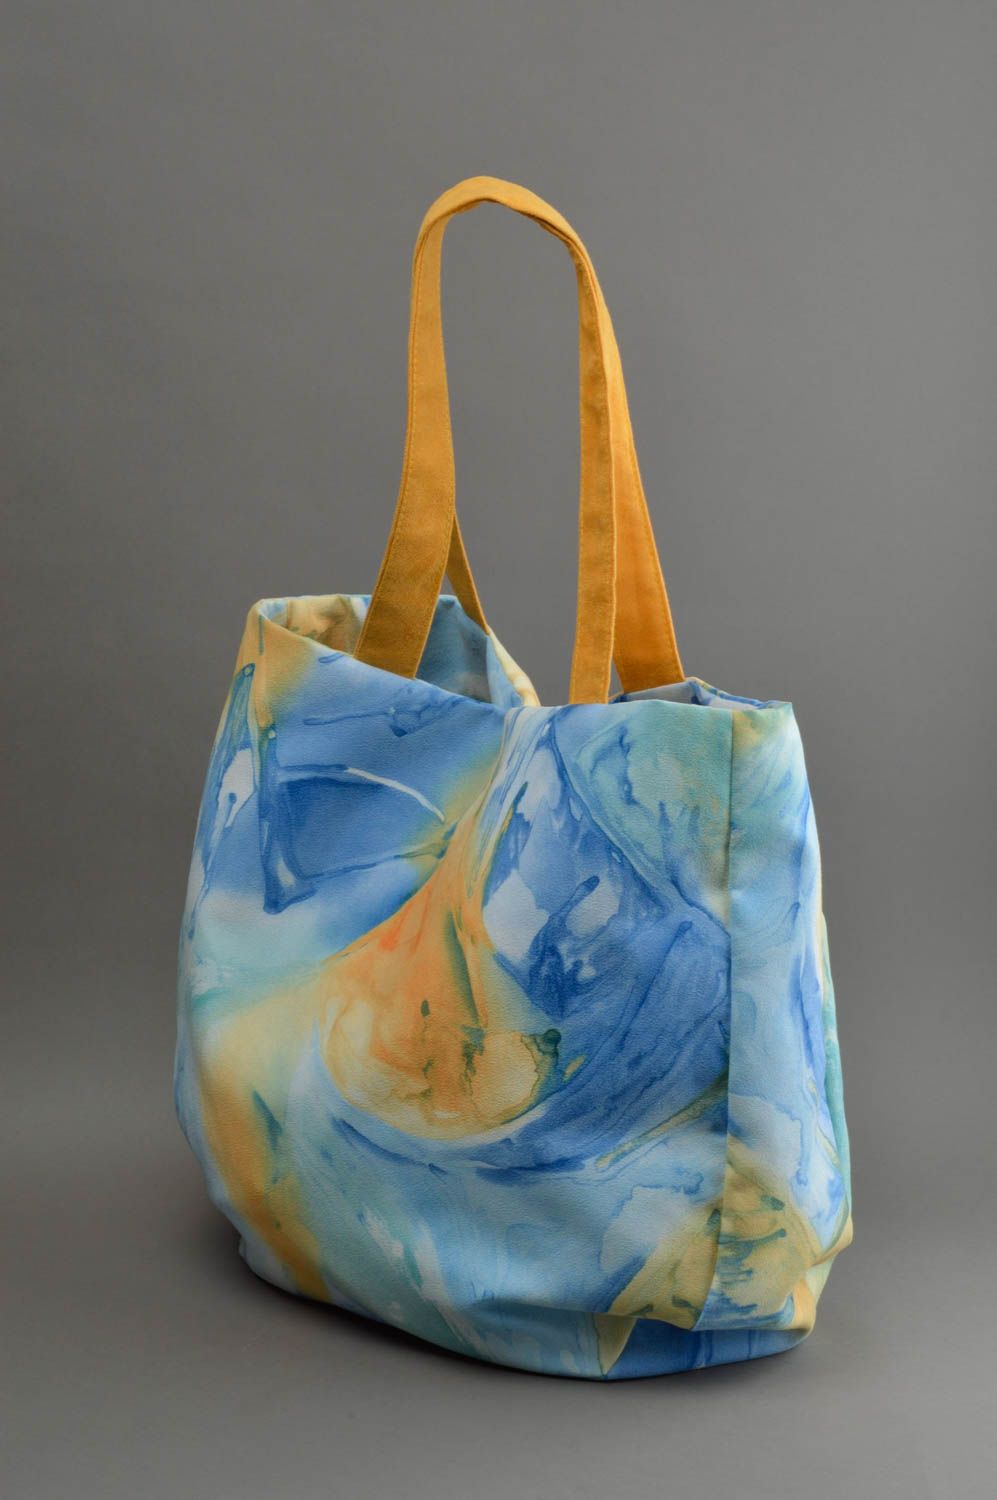 Grand sac à main en daim artificiel fait main bleu-orange fermoir aimanté photo 2